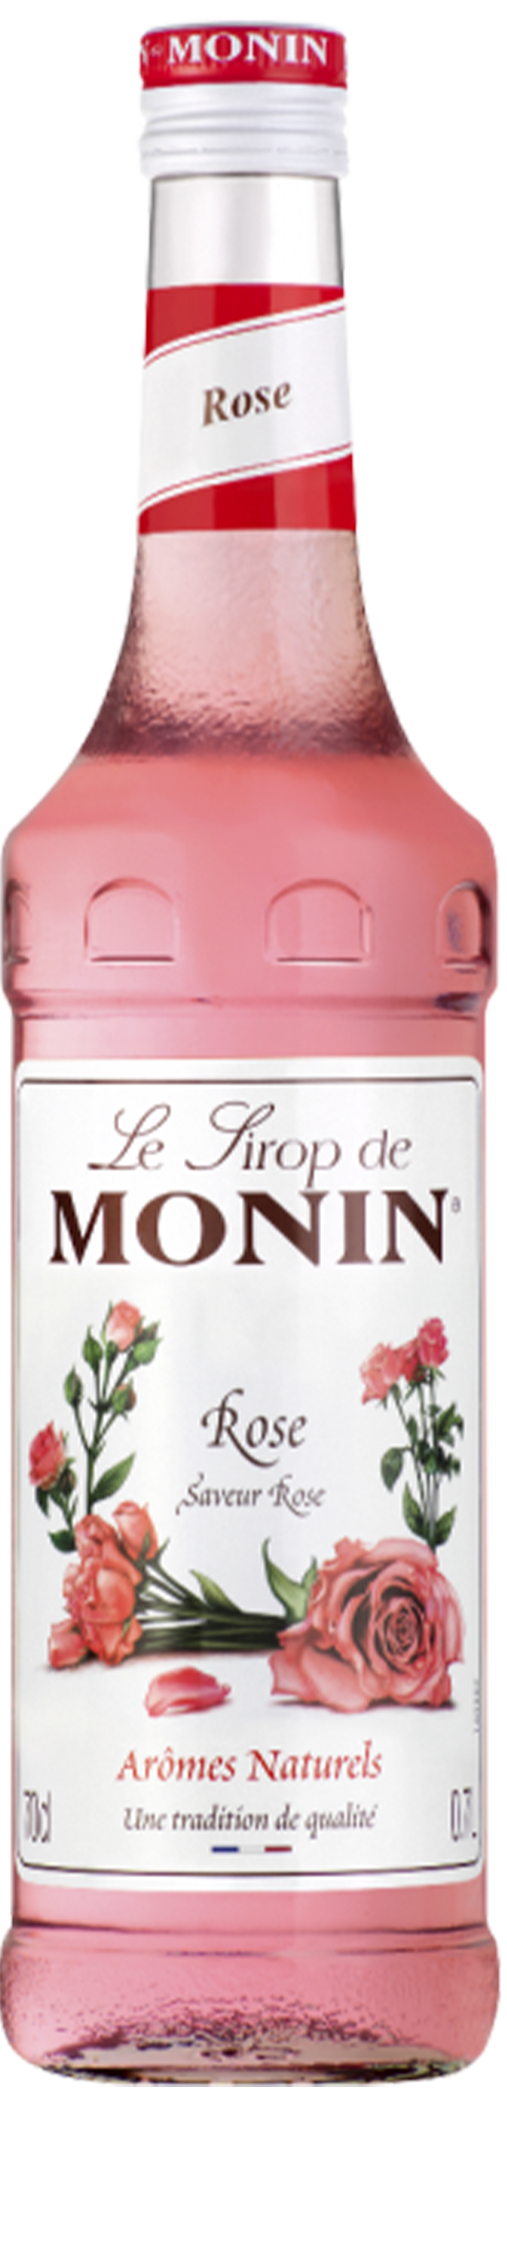 Le Sirop de MONIN Rose 0.7L